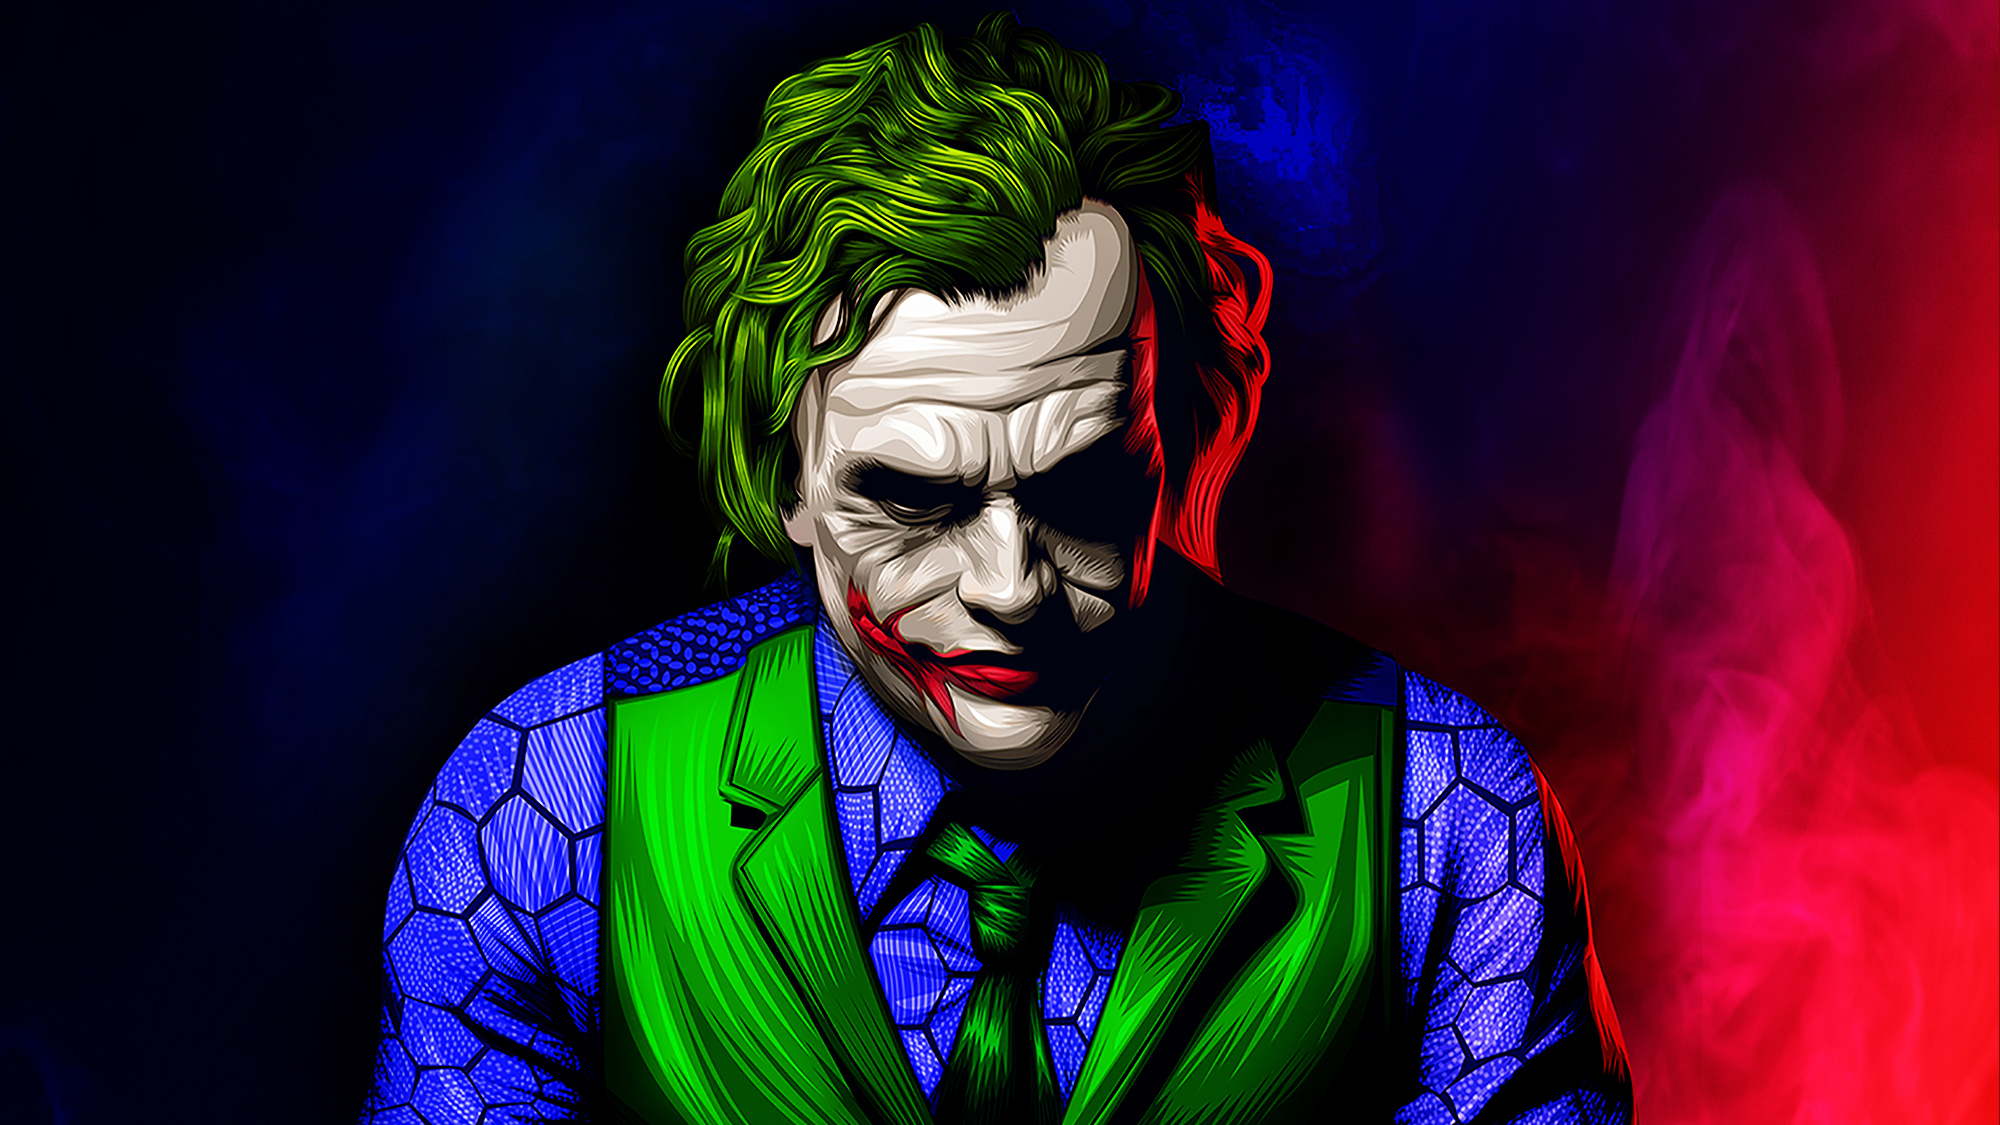 Hình nền Joker buồn